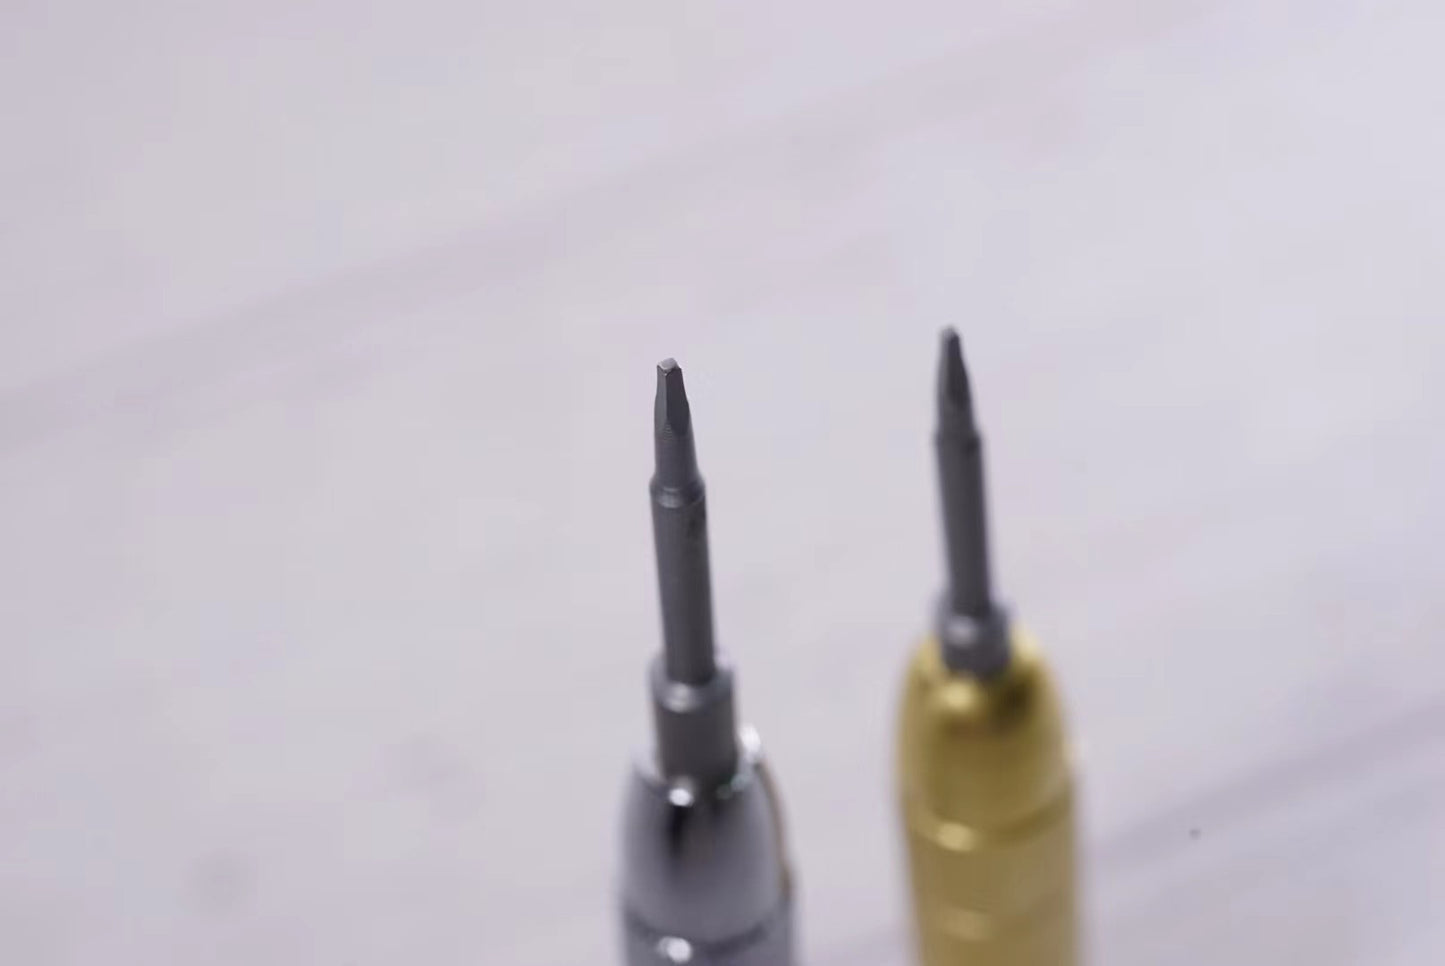 1mm x 1mm SquareScrewdriver for Repair tools for Polaroid SX-70/sonar/680 Camera